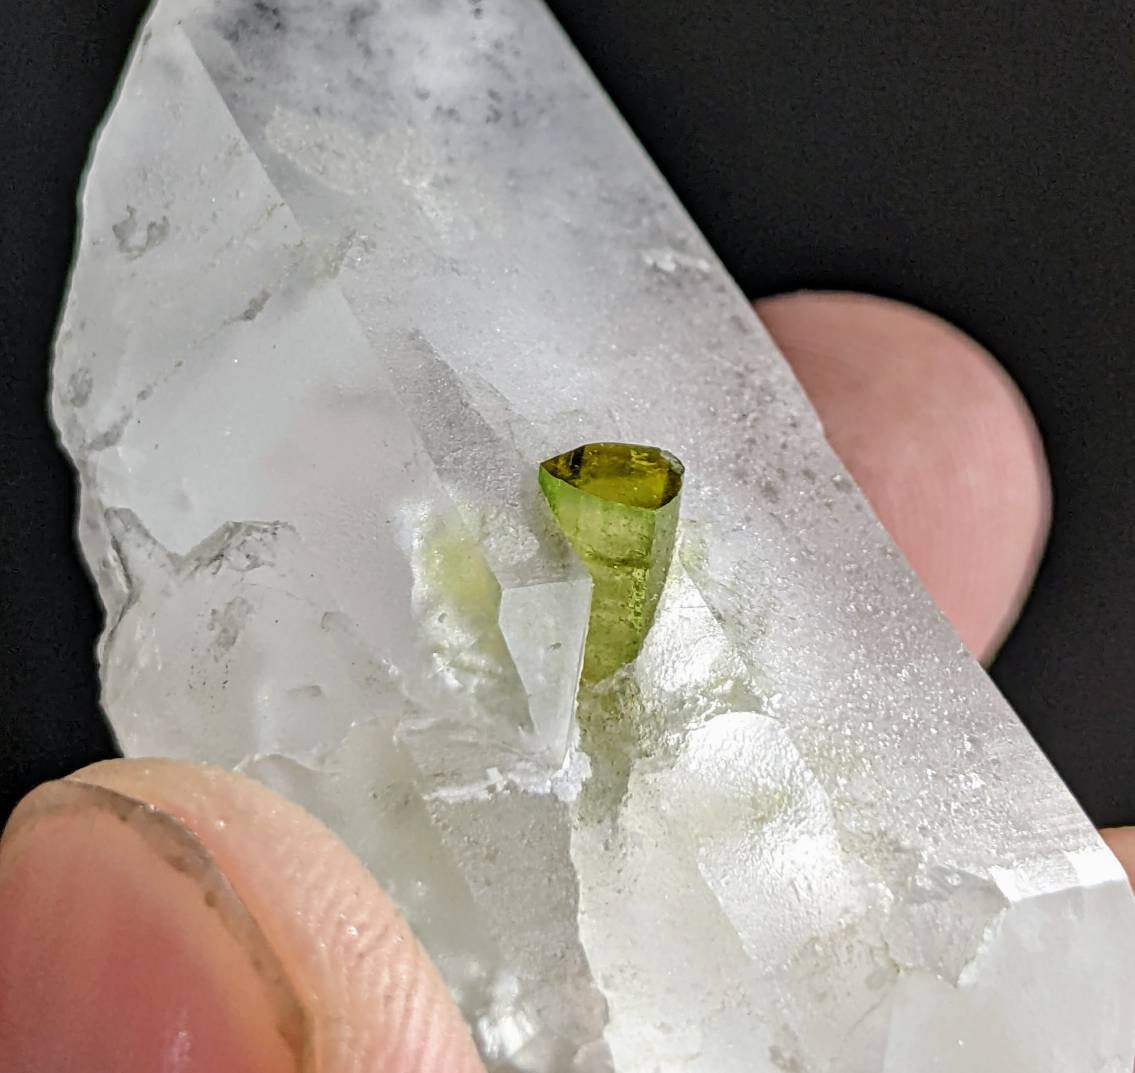 ARSAA GEMS AND MINERALSTerminated quartz crystal with green on matrix tourmaline crystal inclusion from Chakko Mine Skardu Pakistan, 31.4 grams - Premium  from ARSAA GEMS AND MINERALS - Just $50.00! Shop now at ARSAA GEMS AND MINERALS